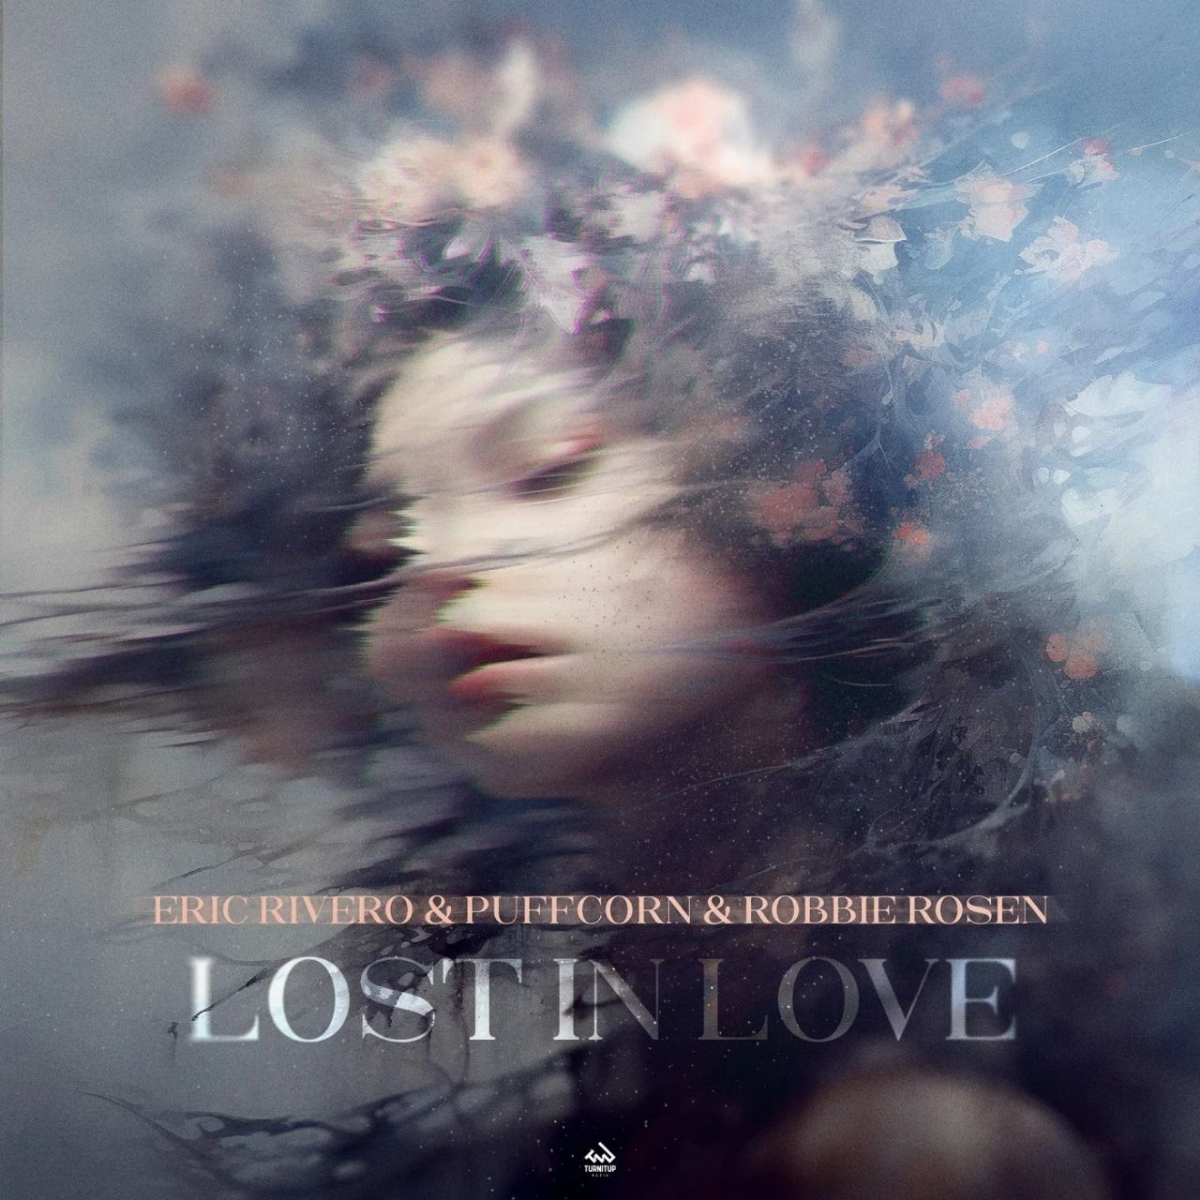 Eric Rivero & PuFFcorn & Robbie Rosen - Lost in Love